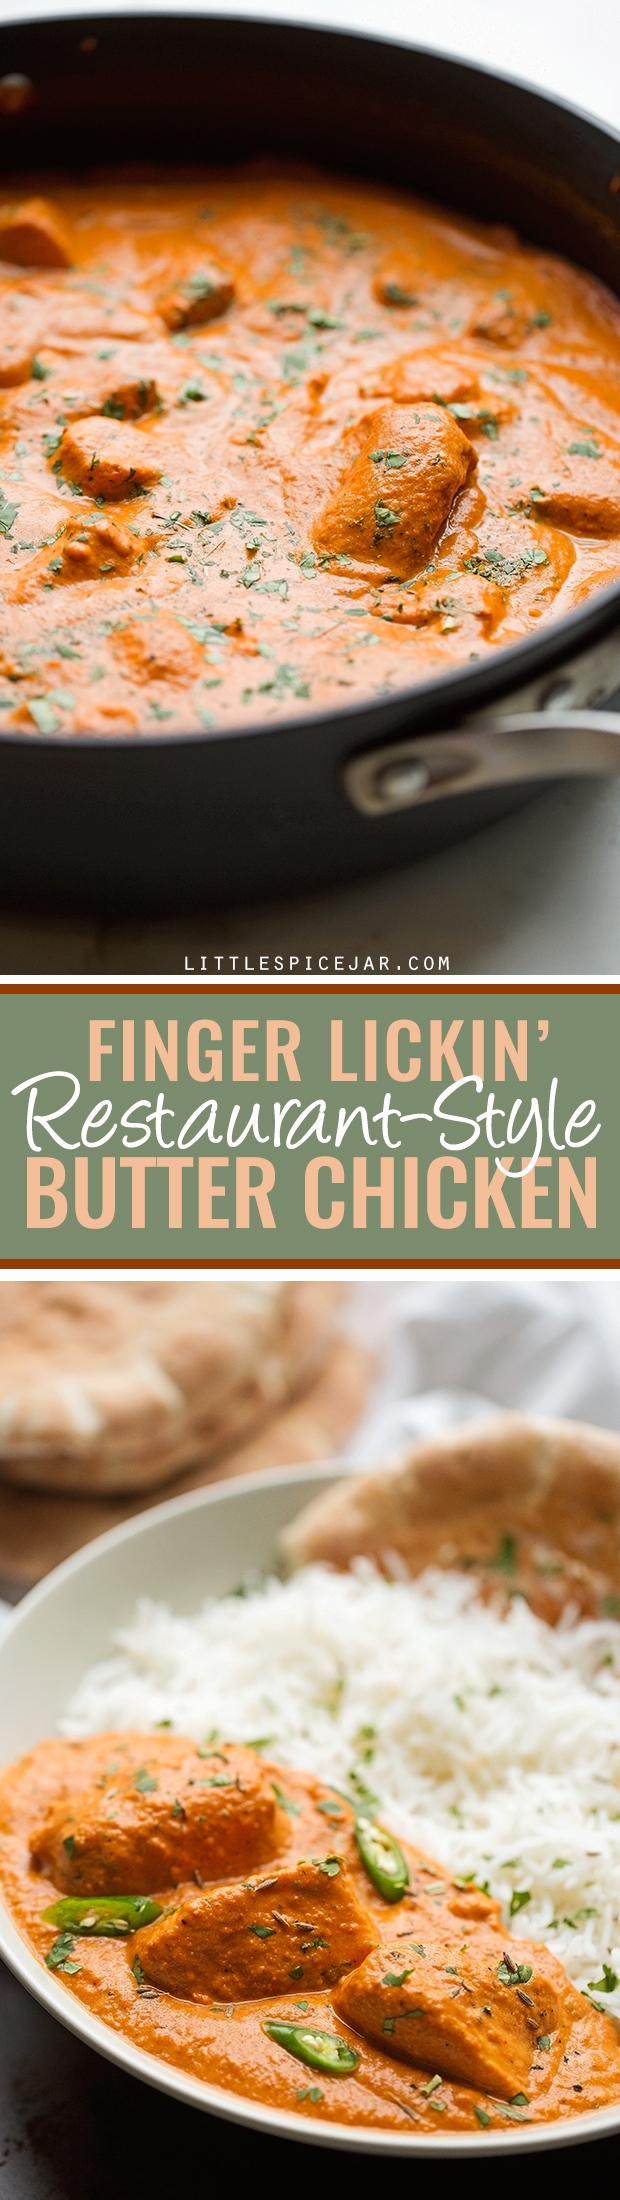 Finger Lickin' Butter Chicken - Restaurant style butter chicken right at home with simple ingredients! #butterchicken #murghmakhani #chickenrecipes | Littlespicejar.com